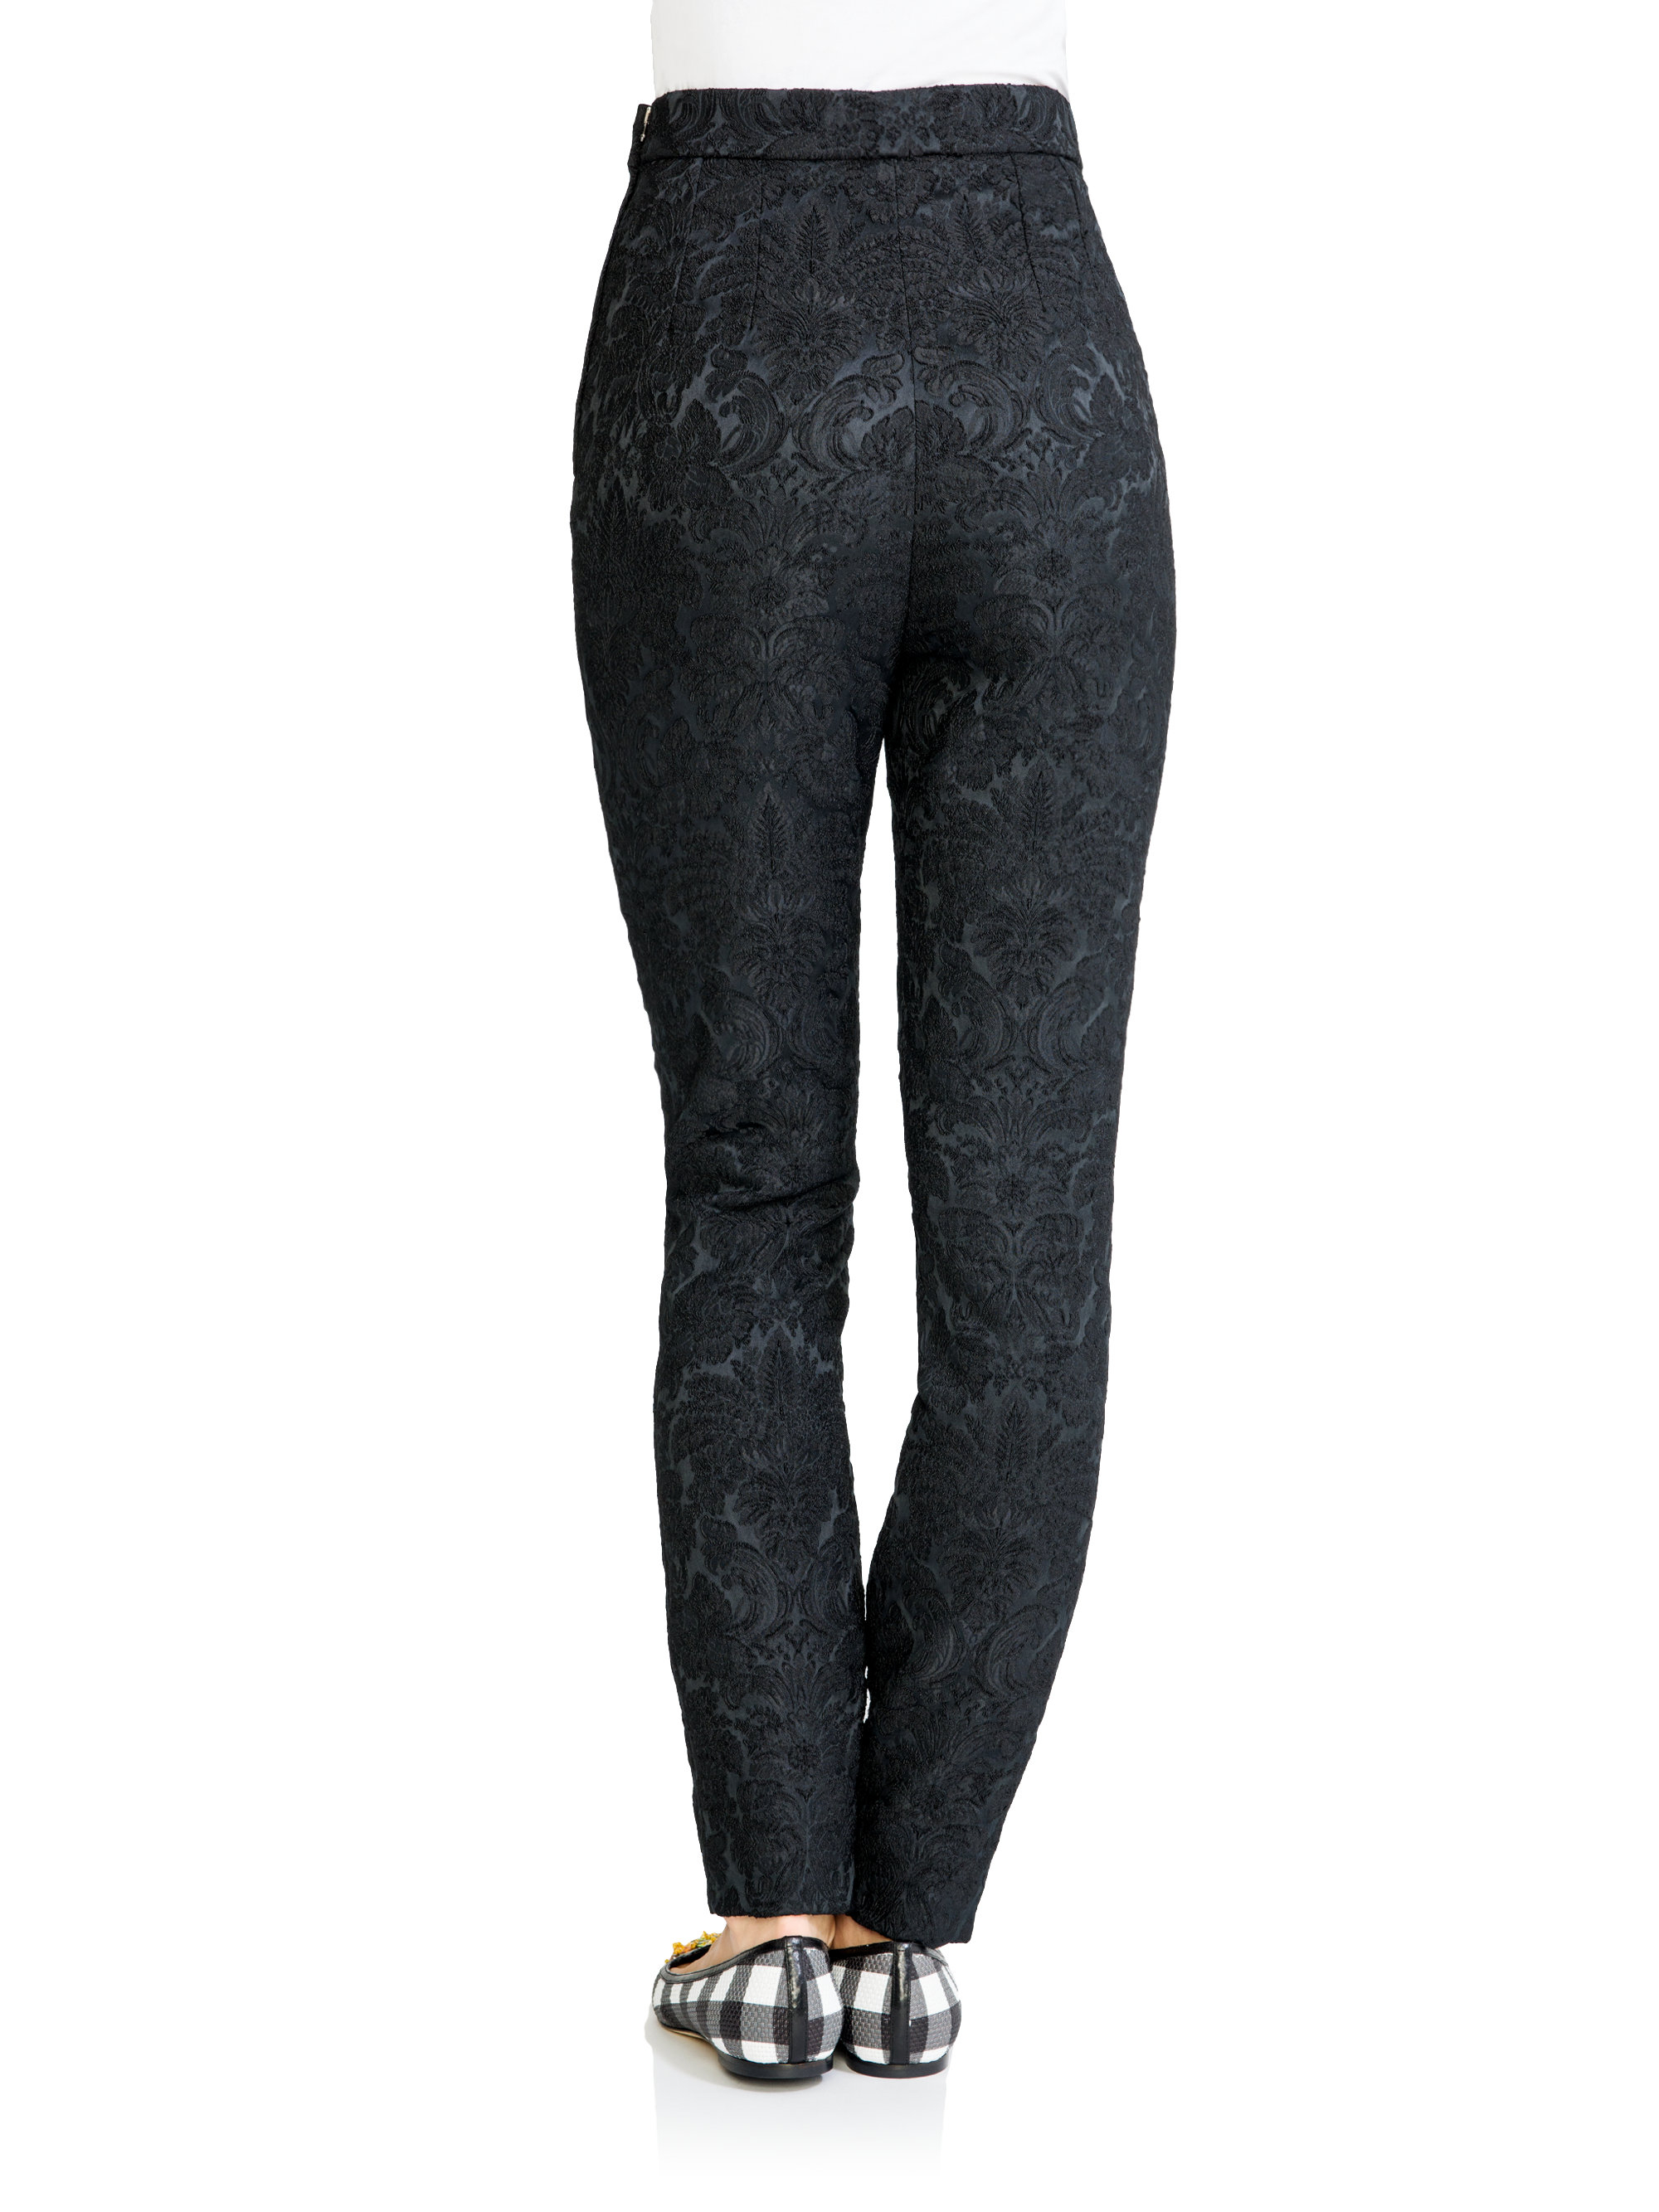 Dolce & Gabbana Jacquard High-waist Pants in Black - Lyst